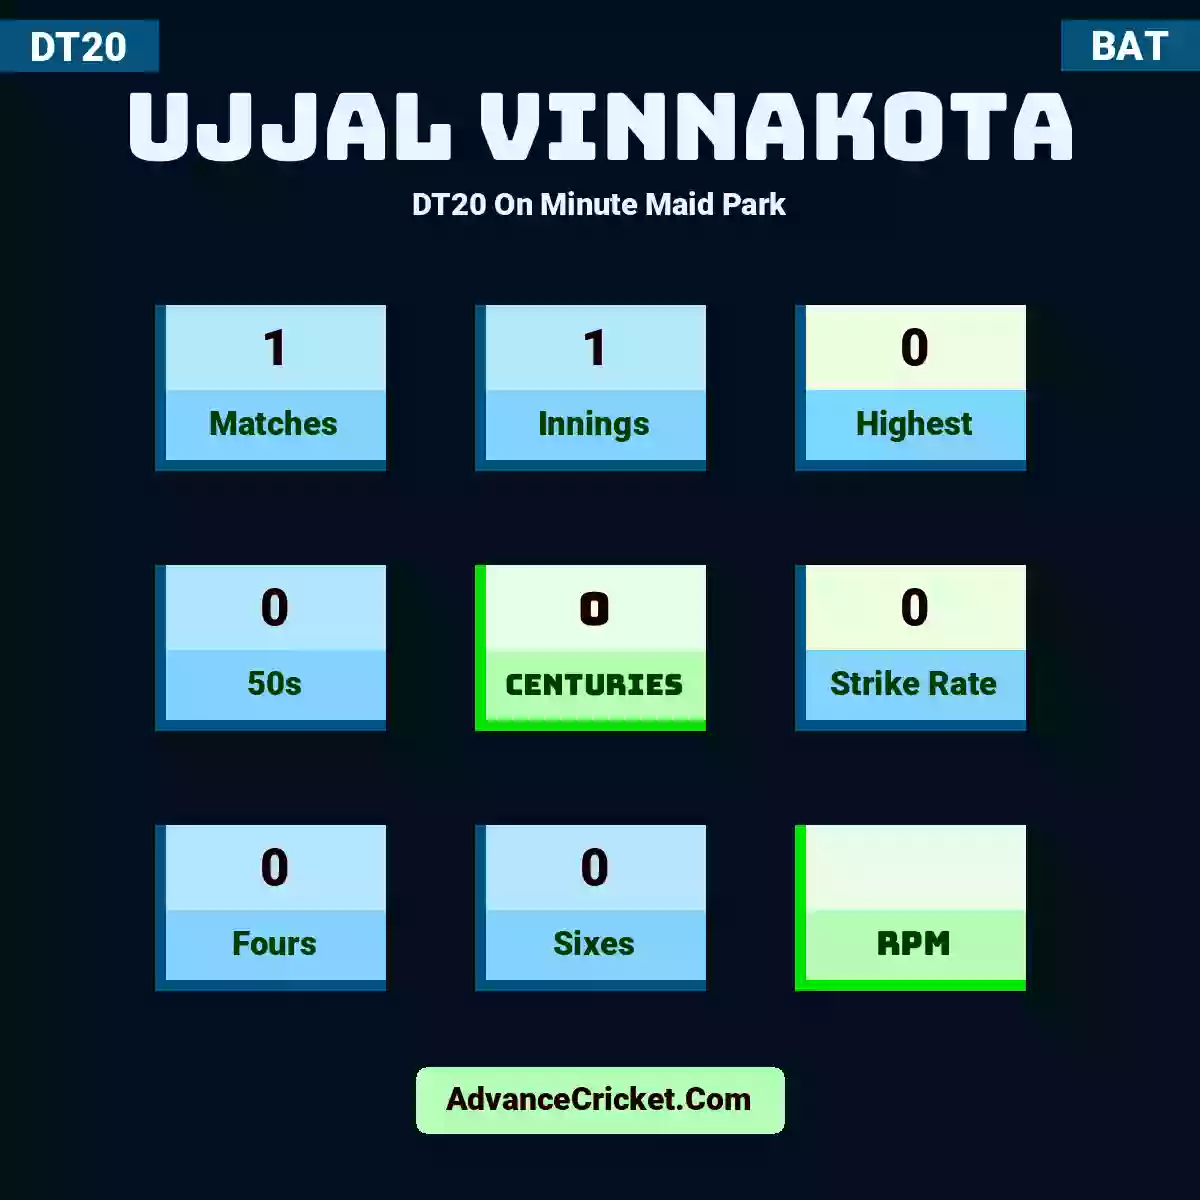 Ujjal Vinnakota DT20  On Minute Maid Park, Ujjal Vinnakota played 1 matches, scored 0 runs as highest, 0 half-centuries, and 0 centuries, with a strike rate of 0. U.Vinnakota hit 0 fours and 0 sixes.